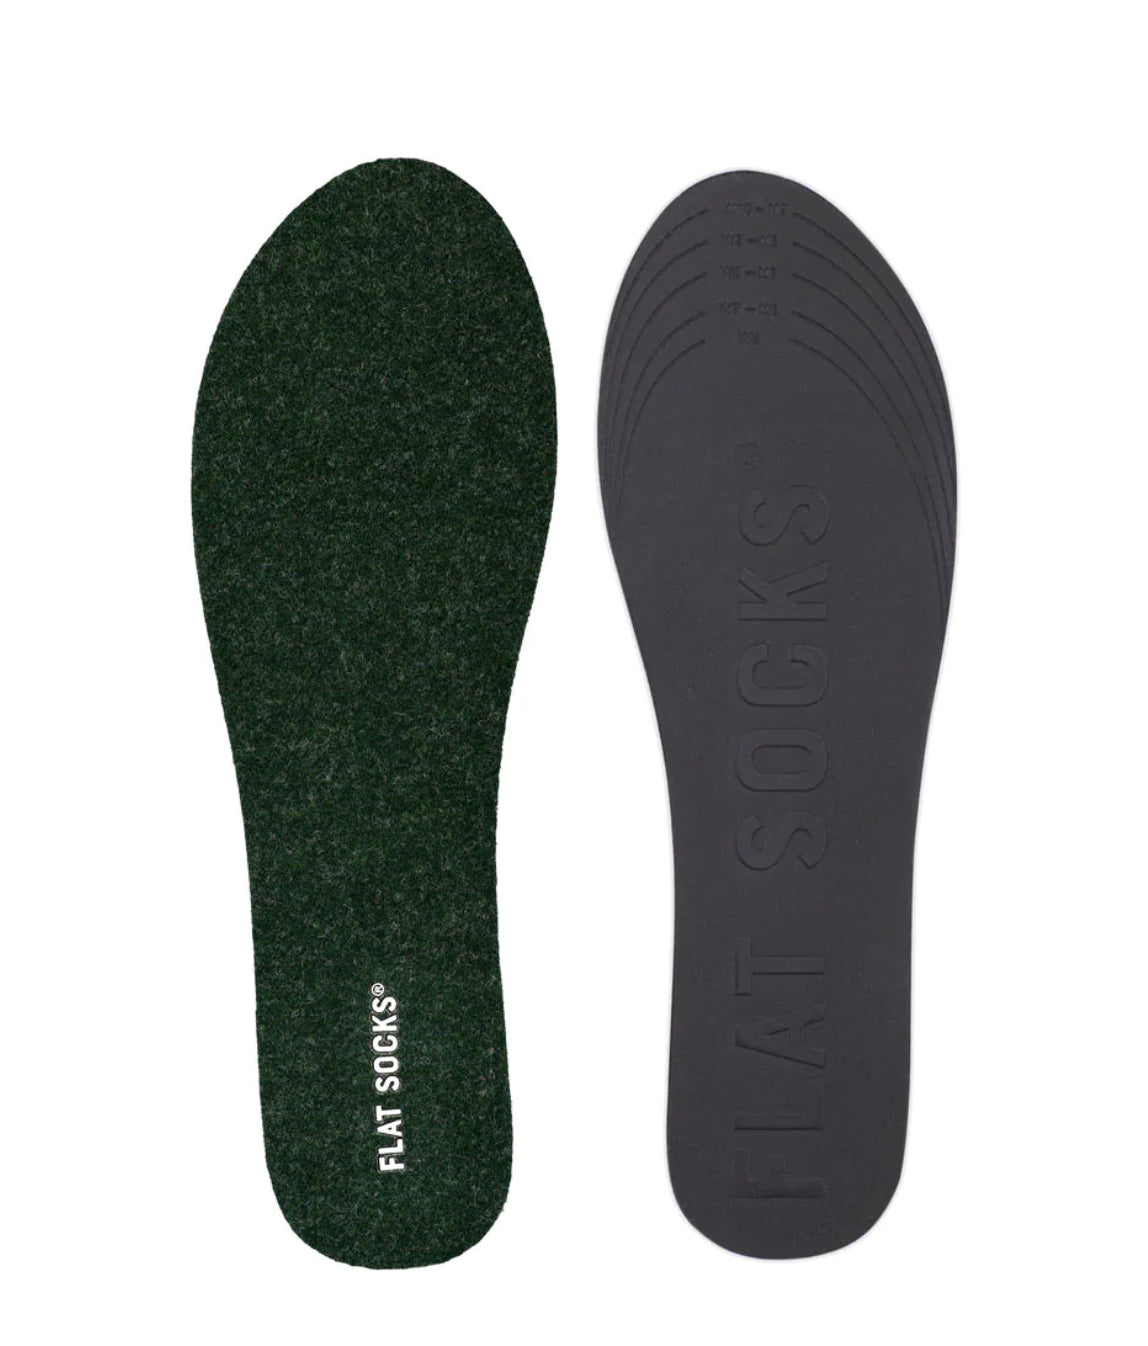 Flat Socks - Forest Green